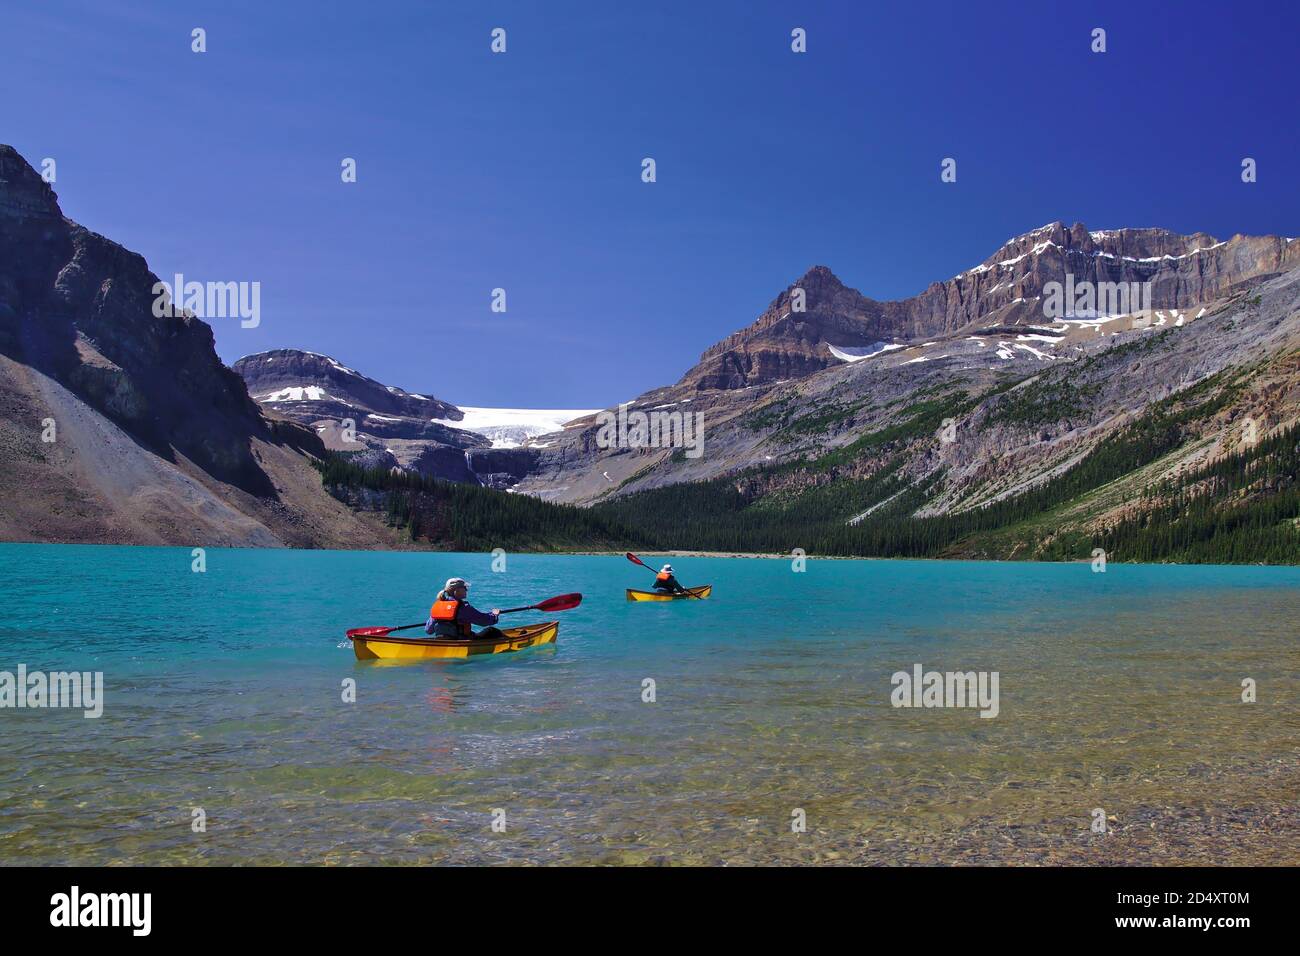 Banff National Park, Alberta - Jul 16, 2018 - Kayaking in Canadian wilderness Stock Photo